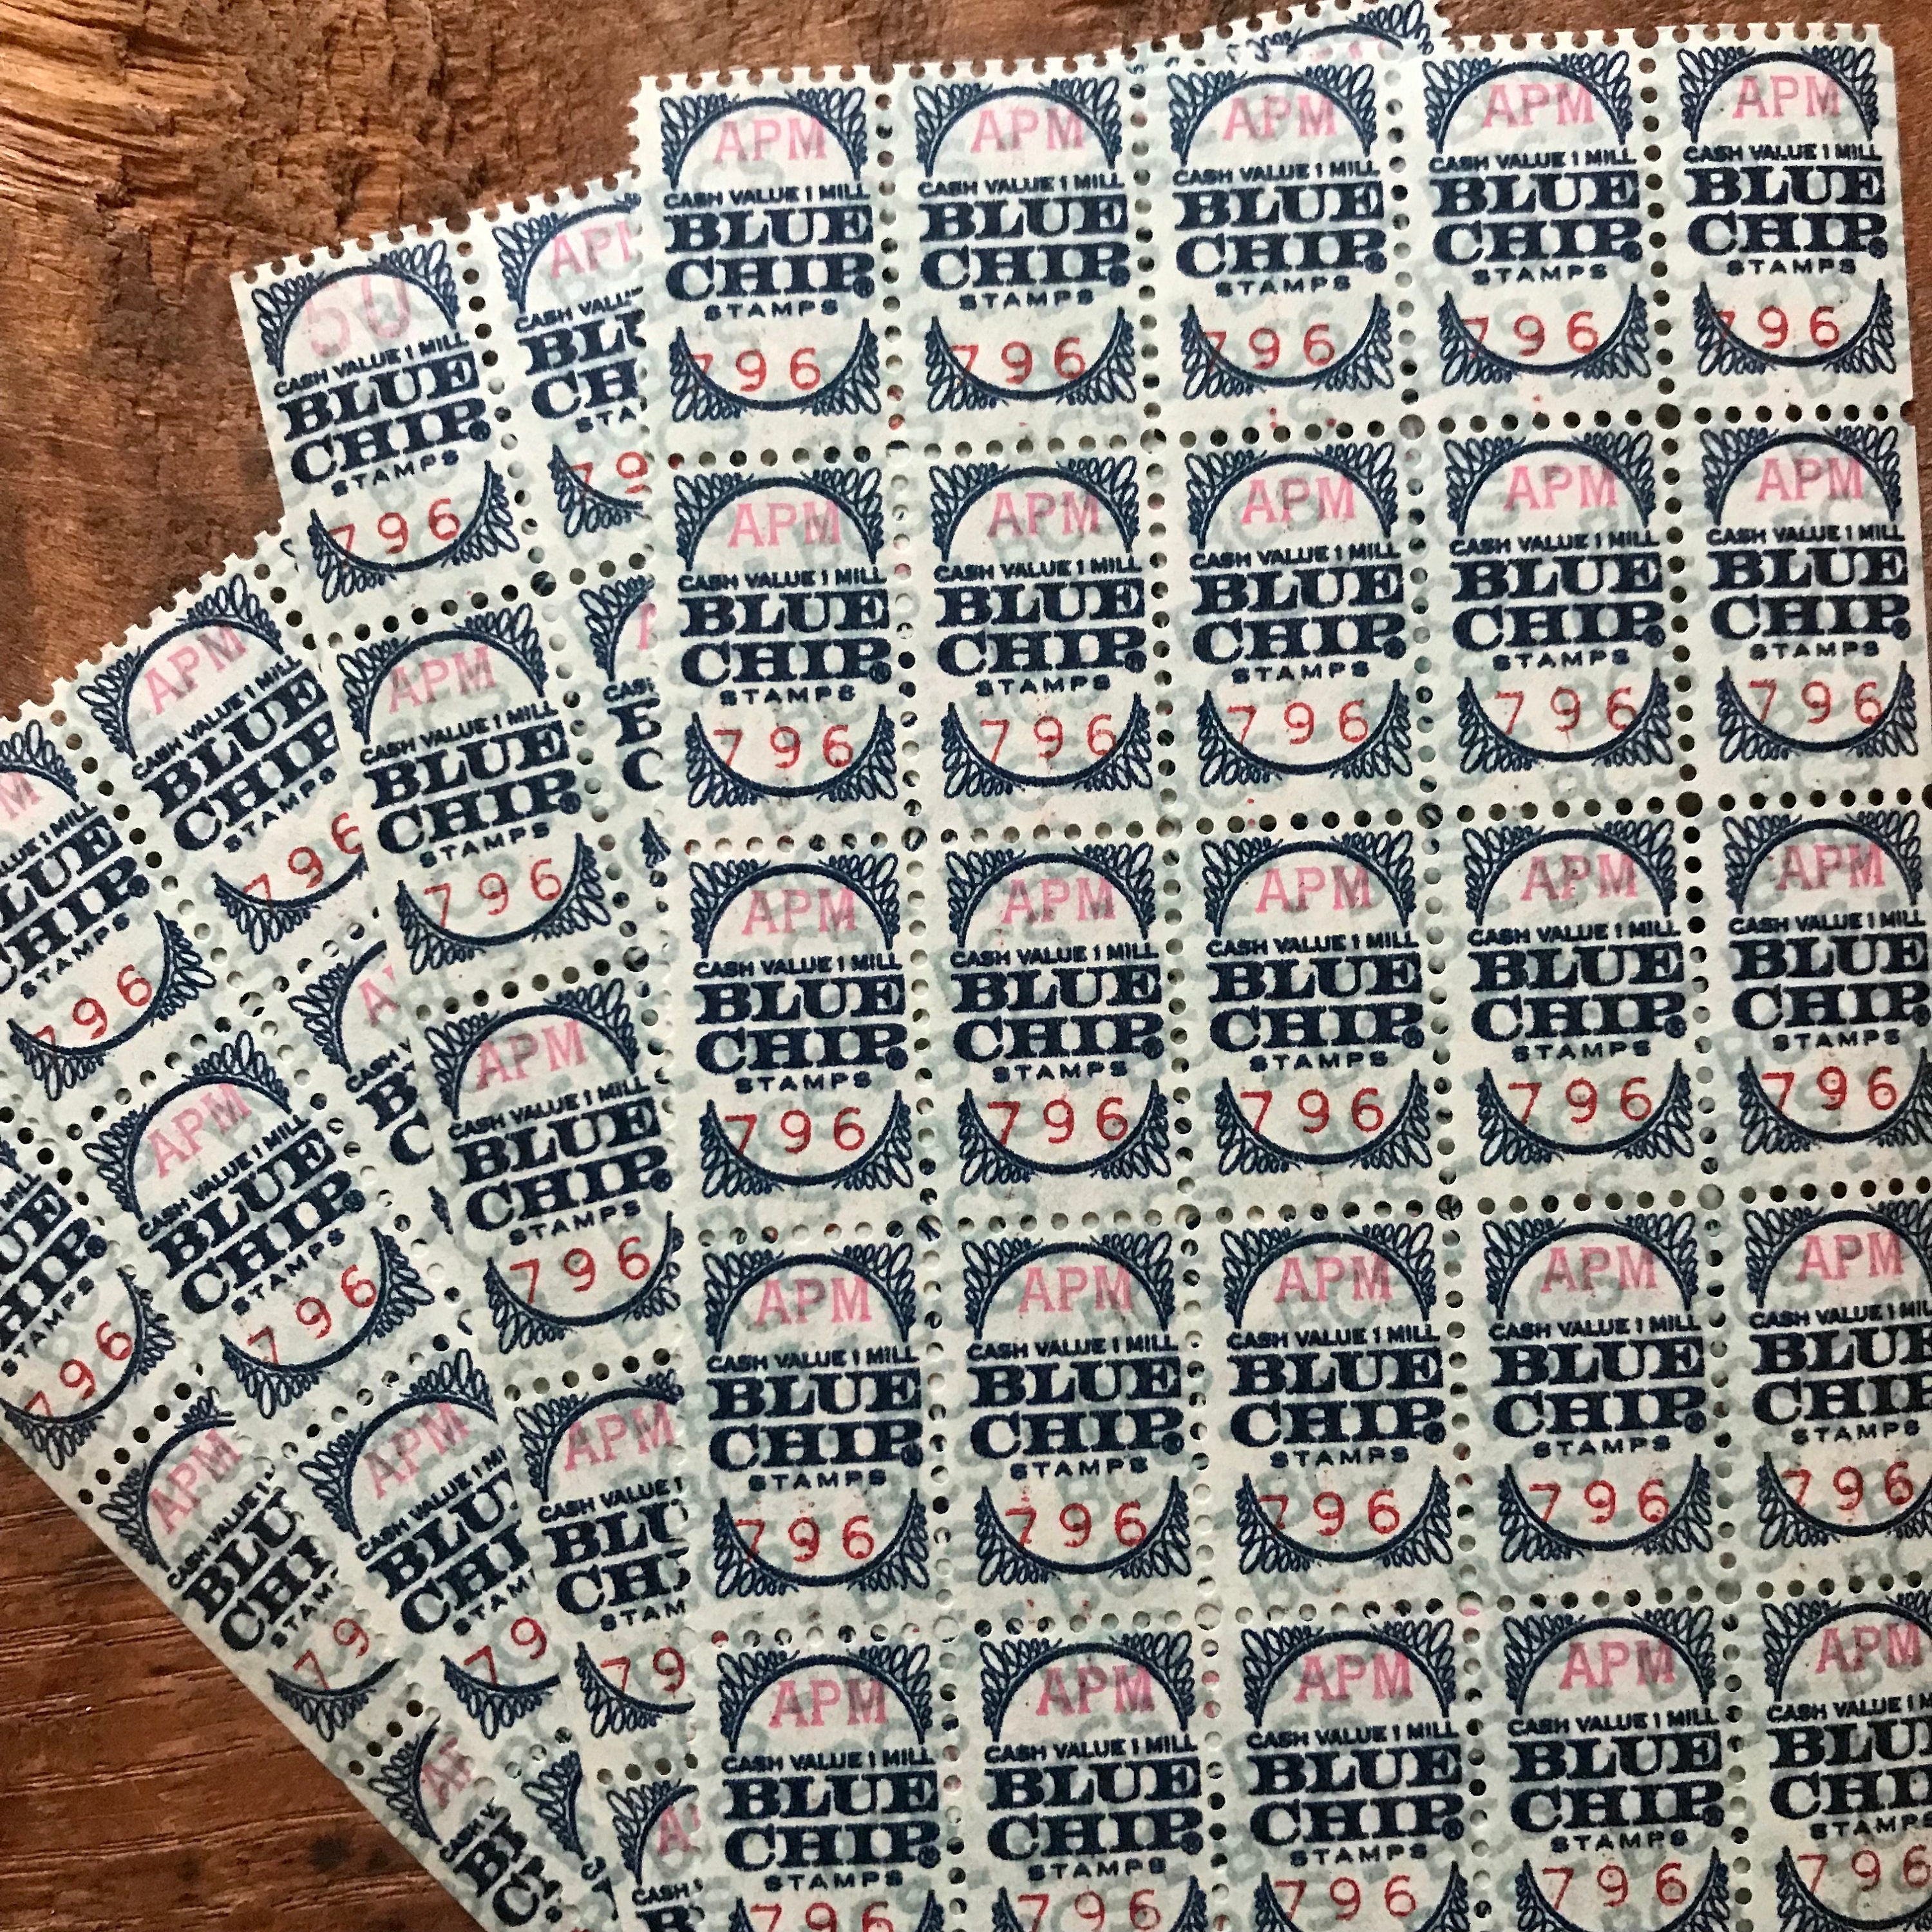 1 Blue Chip Savings Book Filled With Stamps 1960 GC/ Ephemera Junk